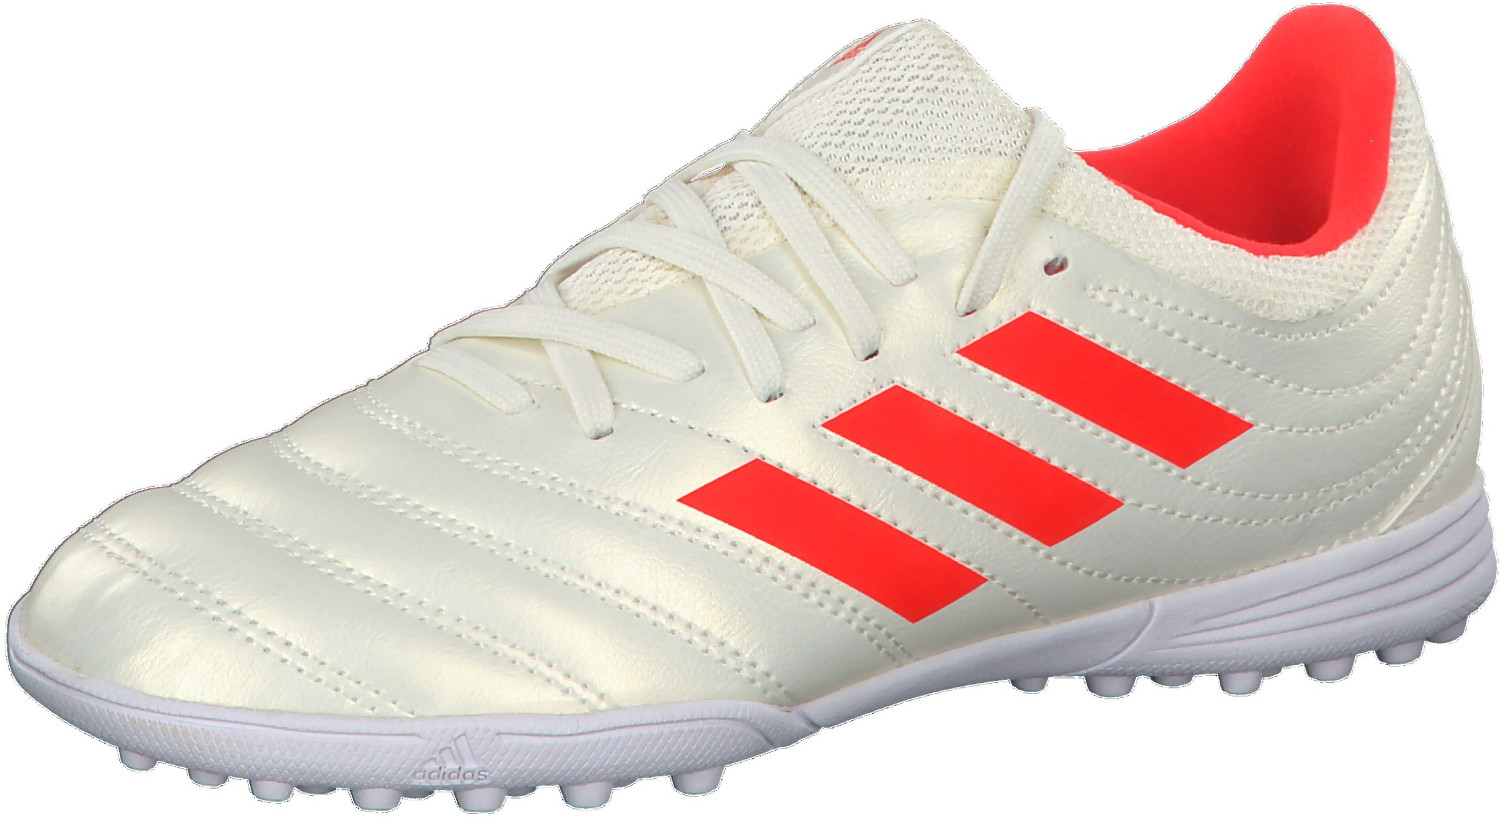 Adidas Copa 19.3 TF Off White / Solar Red / Ftwr White